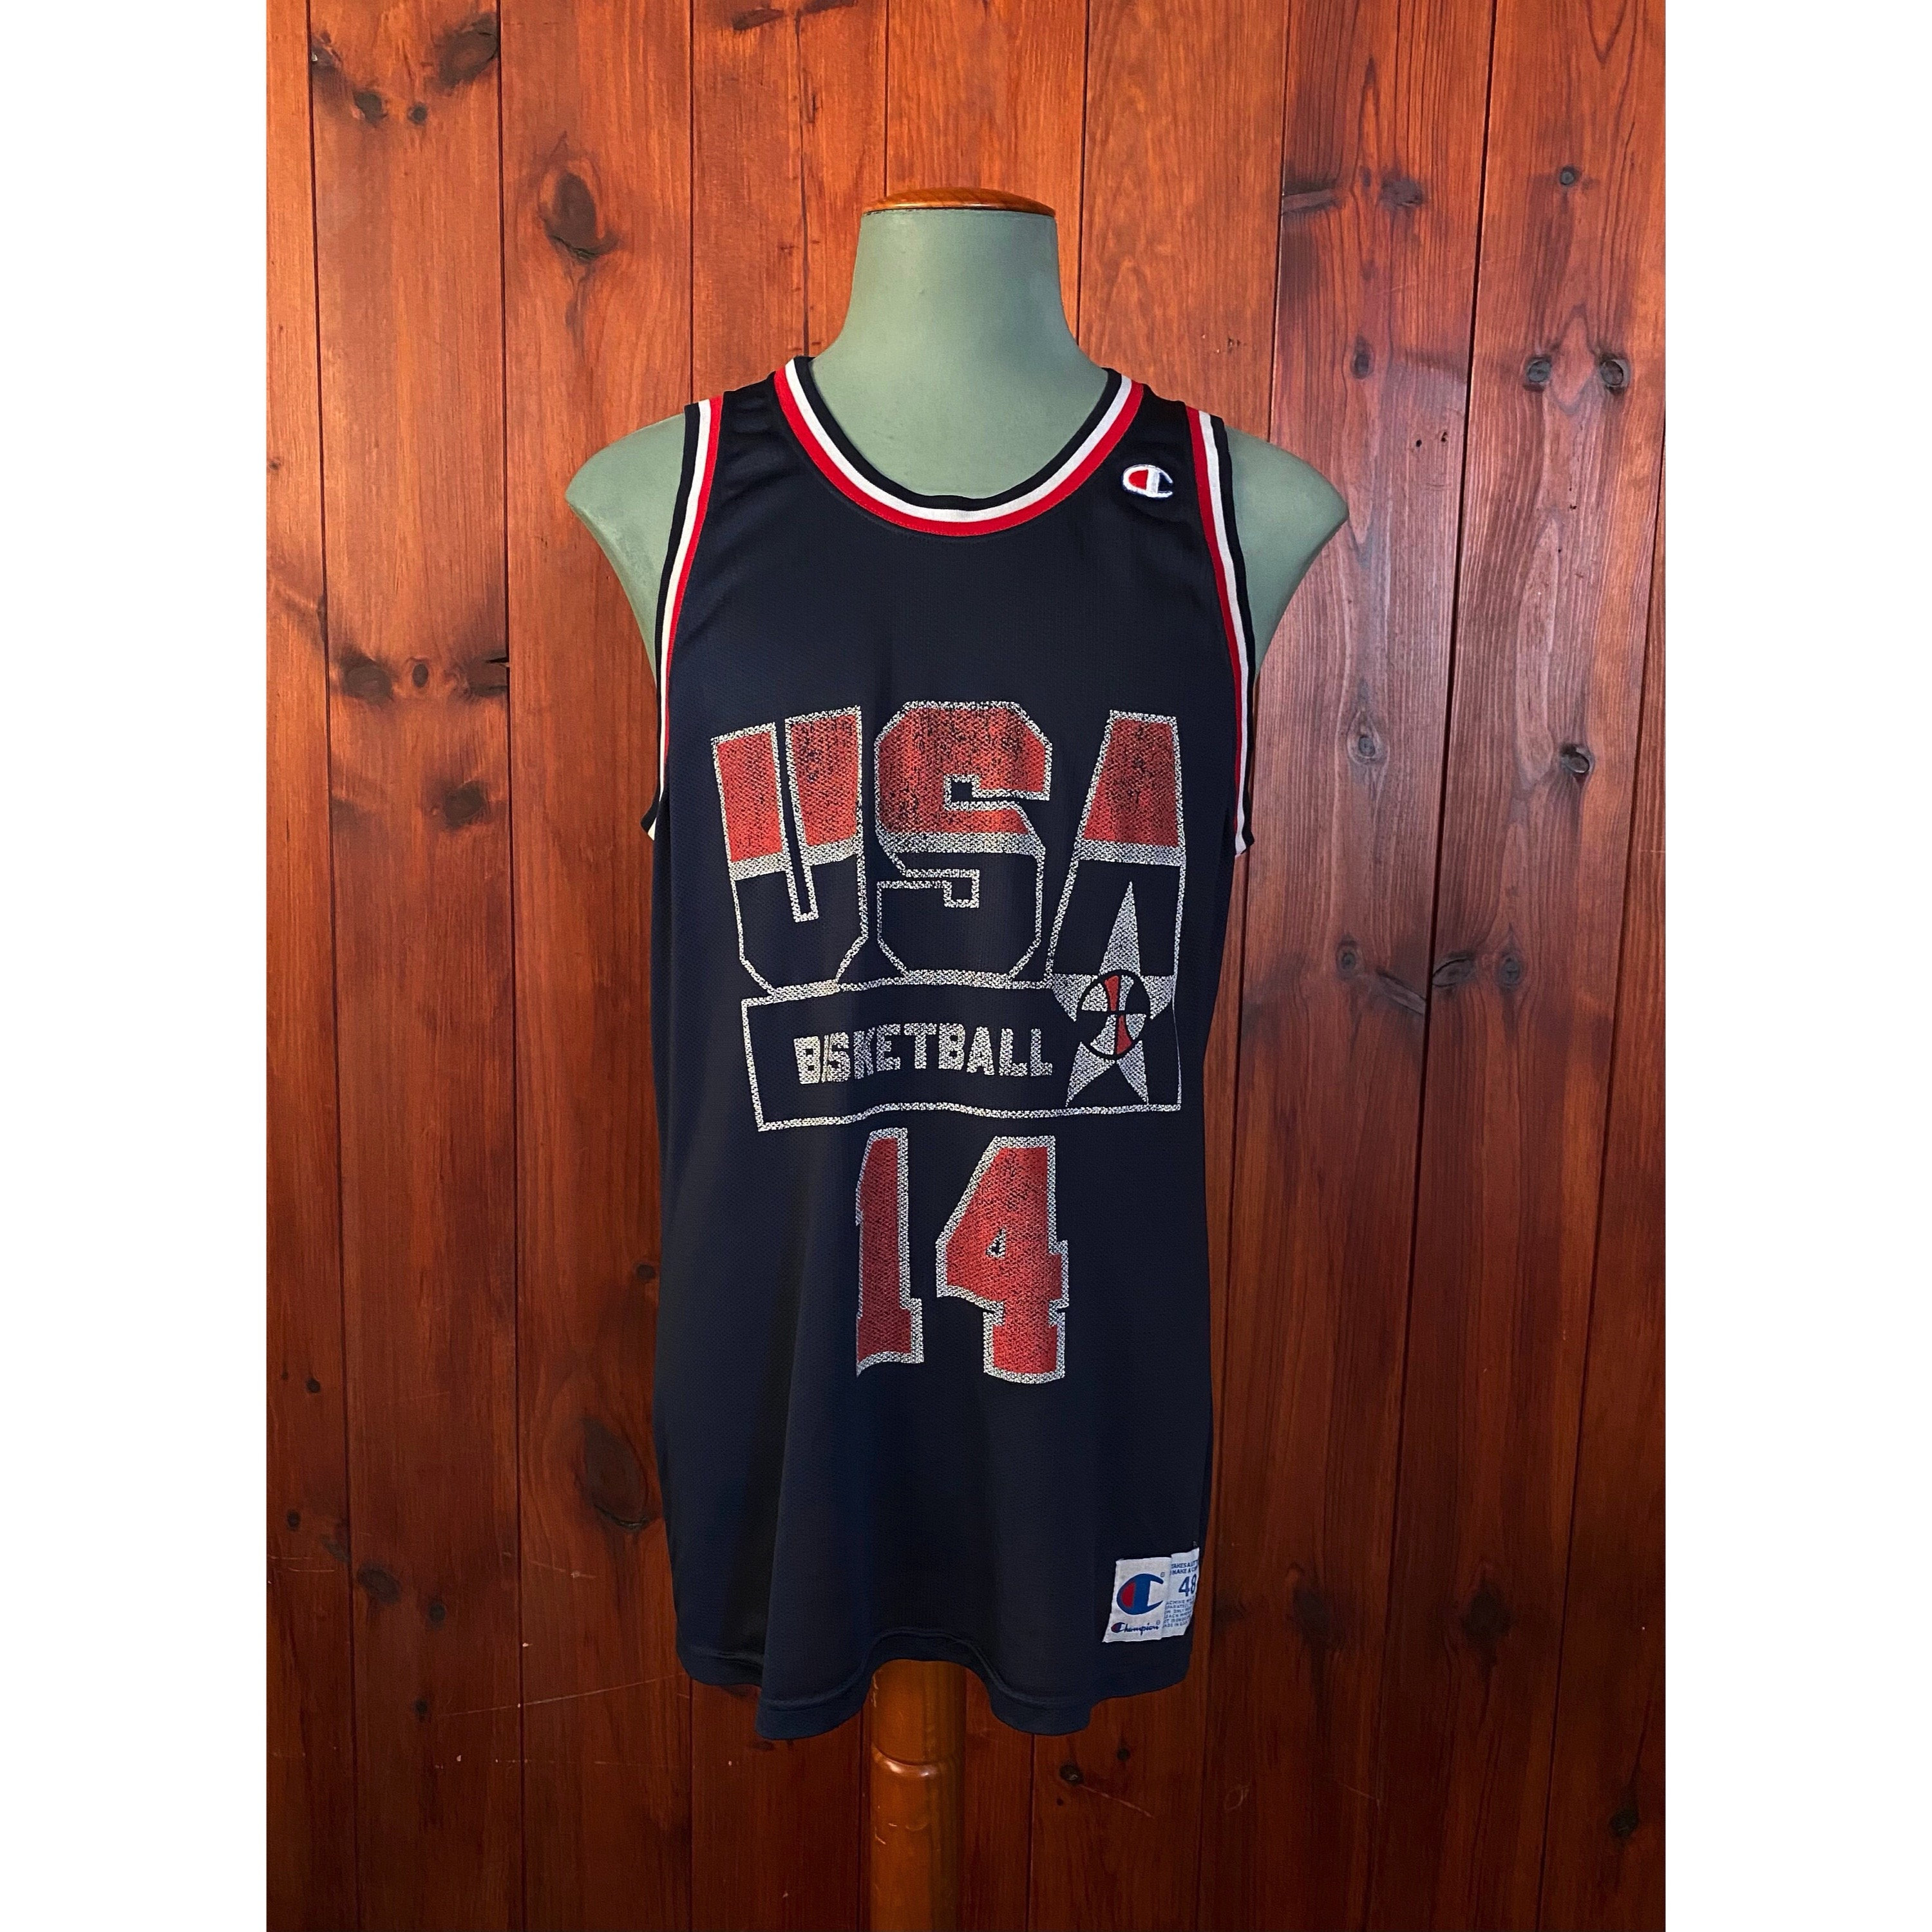 Size 48 VTG Champion Jordan Jersey Chicago Bulls 23 NBA 90s Made